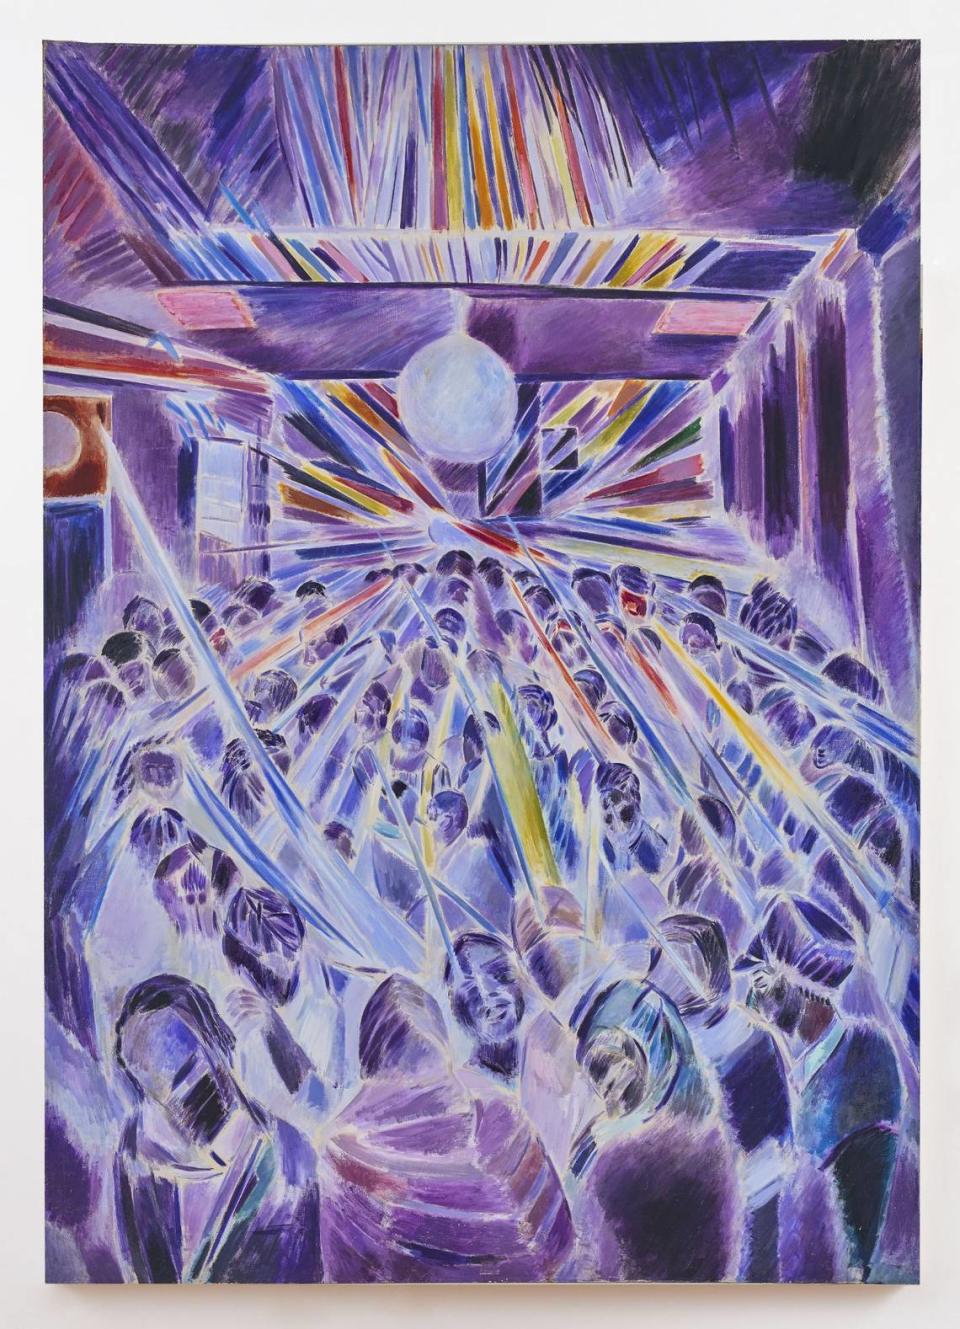 Denzil Forrester, “Night Strobe,” (1985). Oil on canvas. 109 1/8 x 77in.